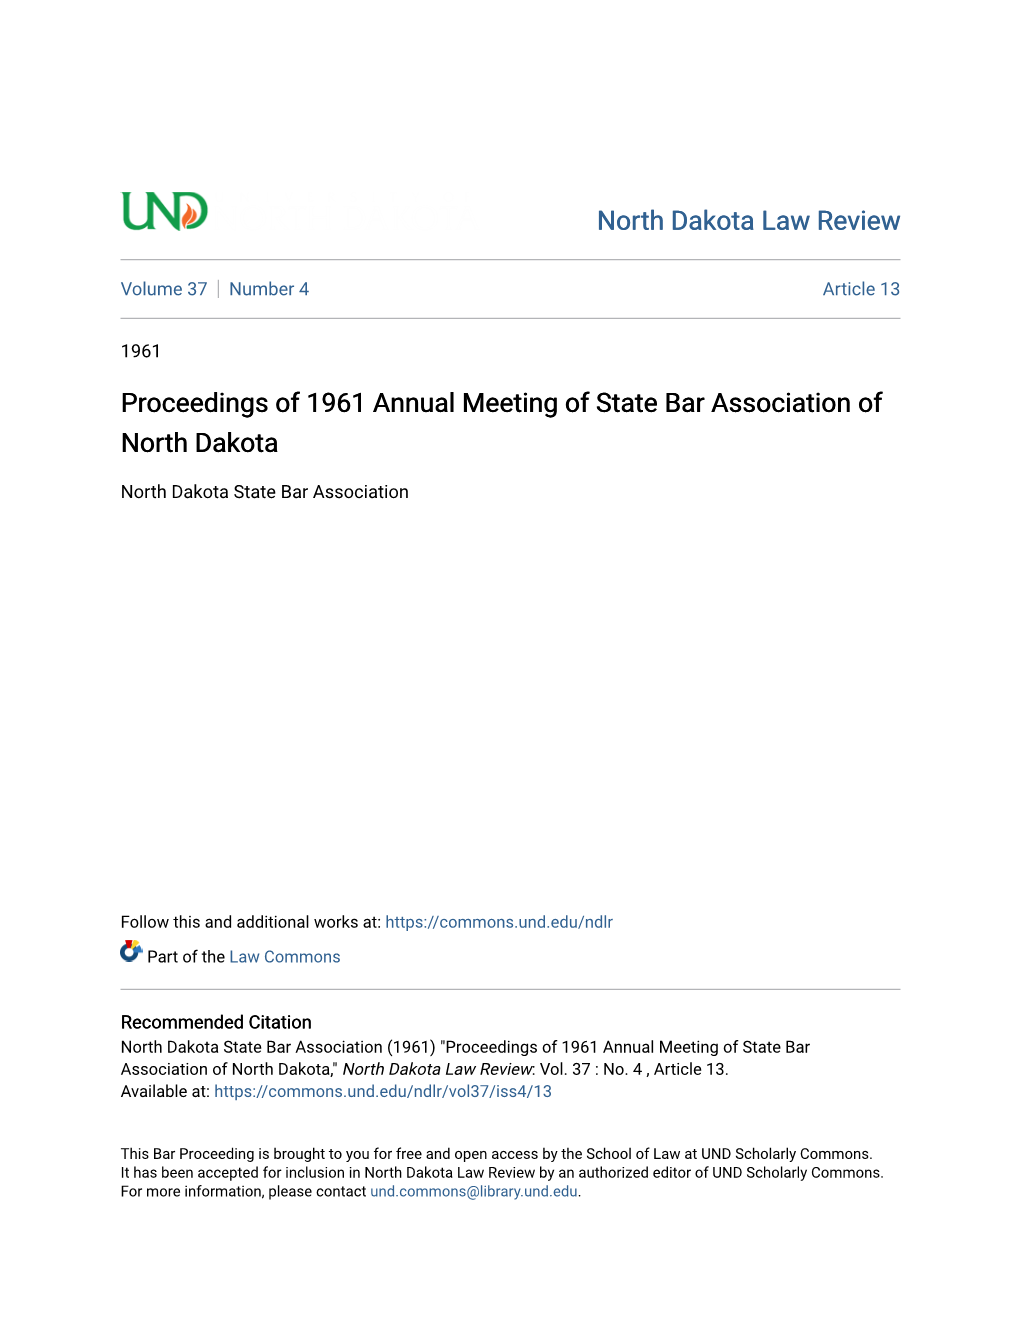 Proceedings of 1961 Annual Meeting of State Bar Association of North Dakota